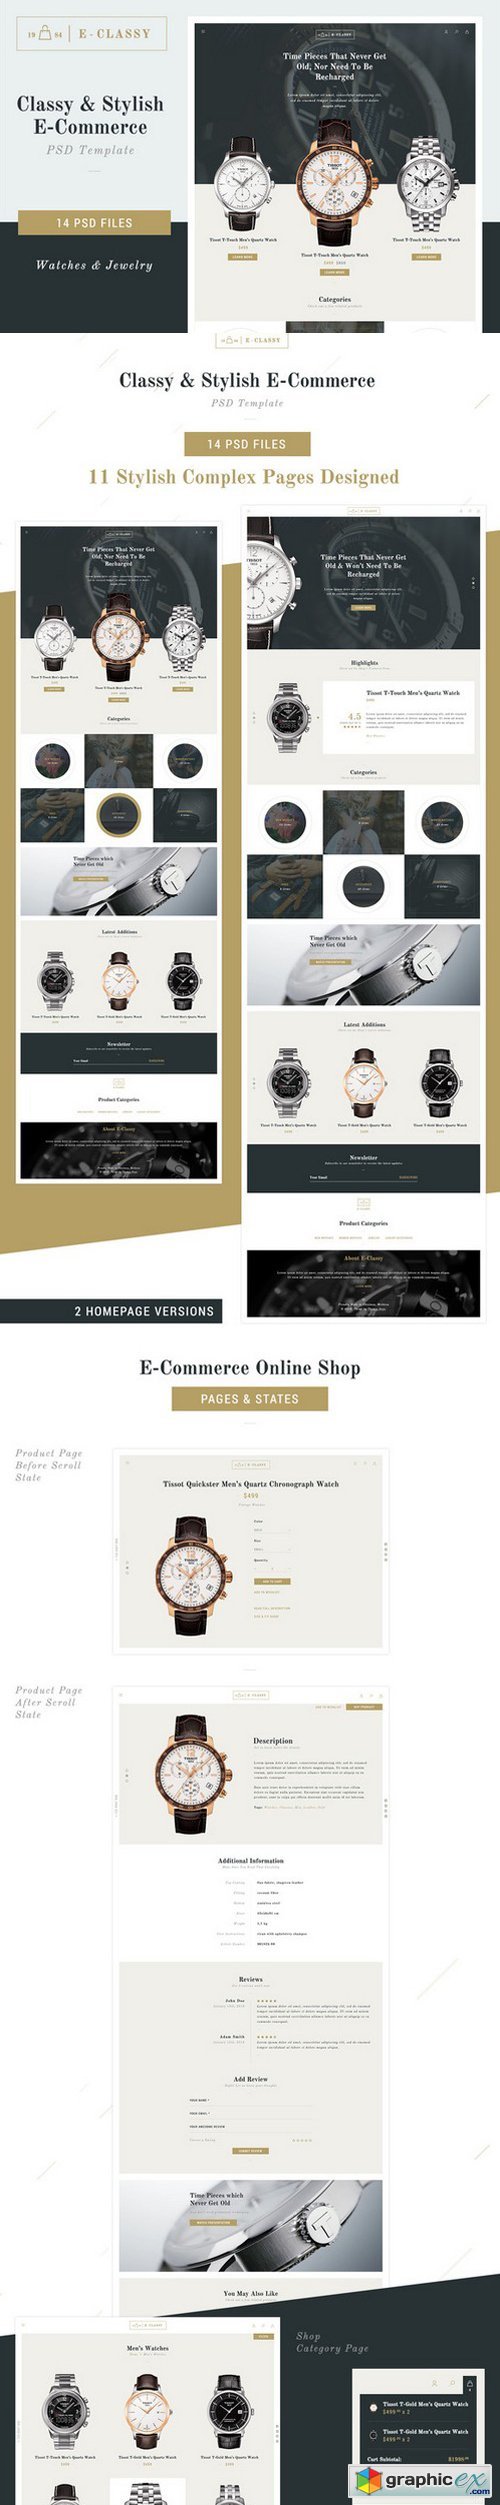 E-Classy - Luxury Shop PSD Template